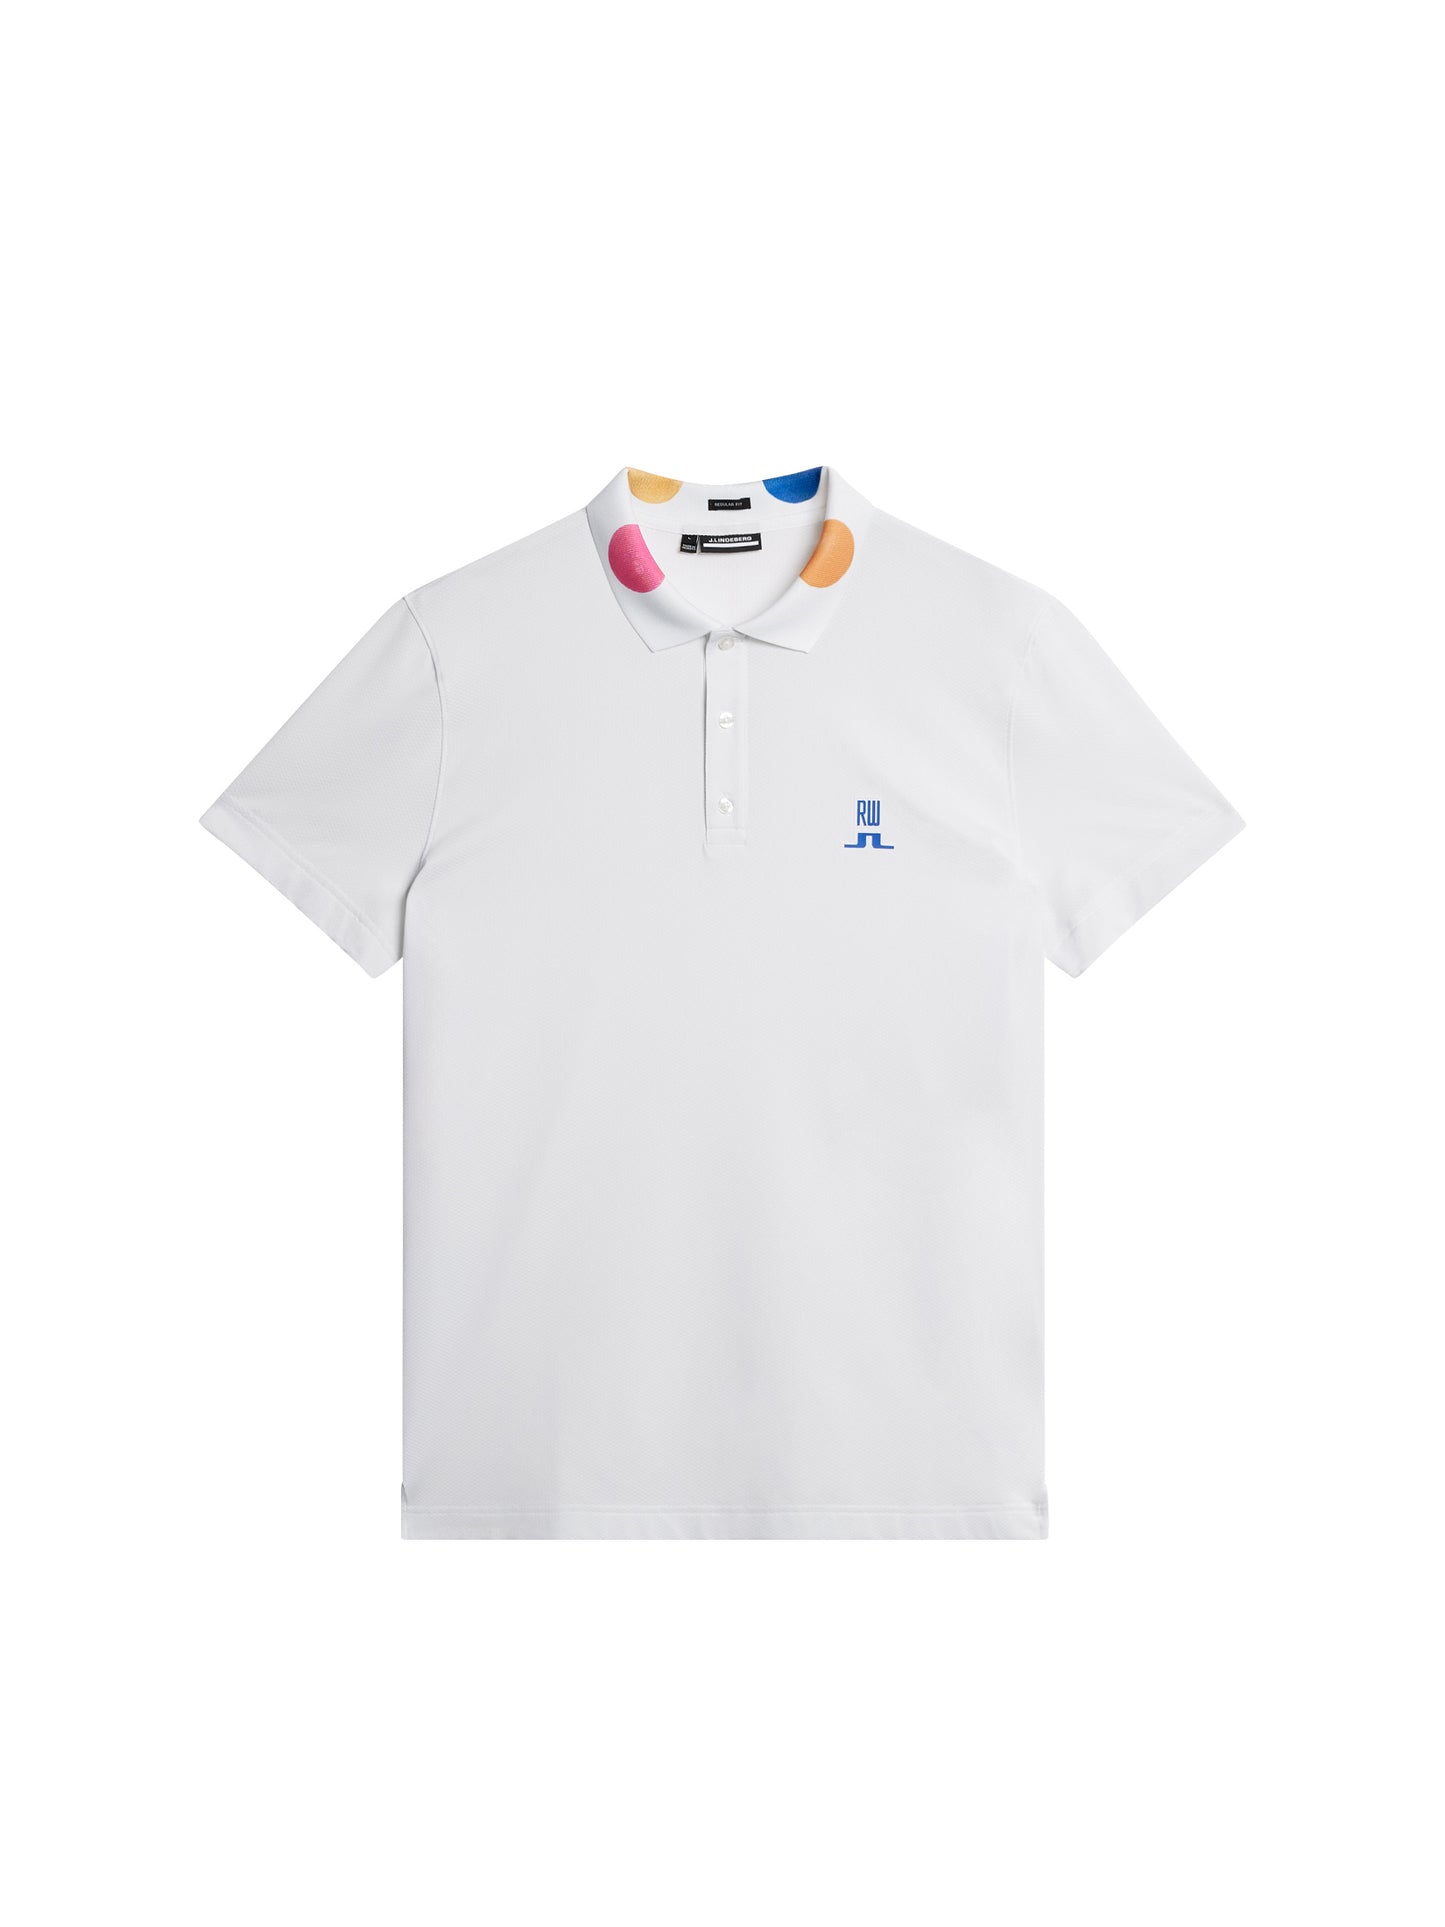 Polo – Tech White Shirt RW / Mesh